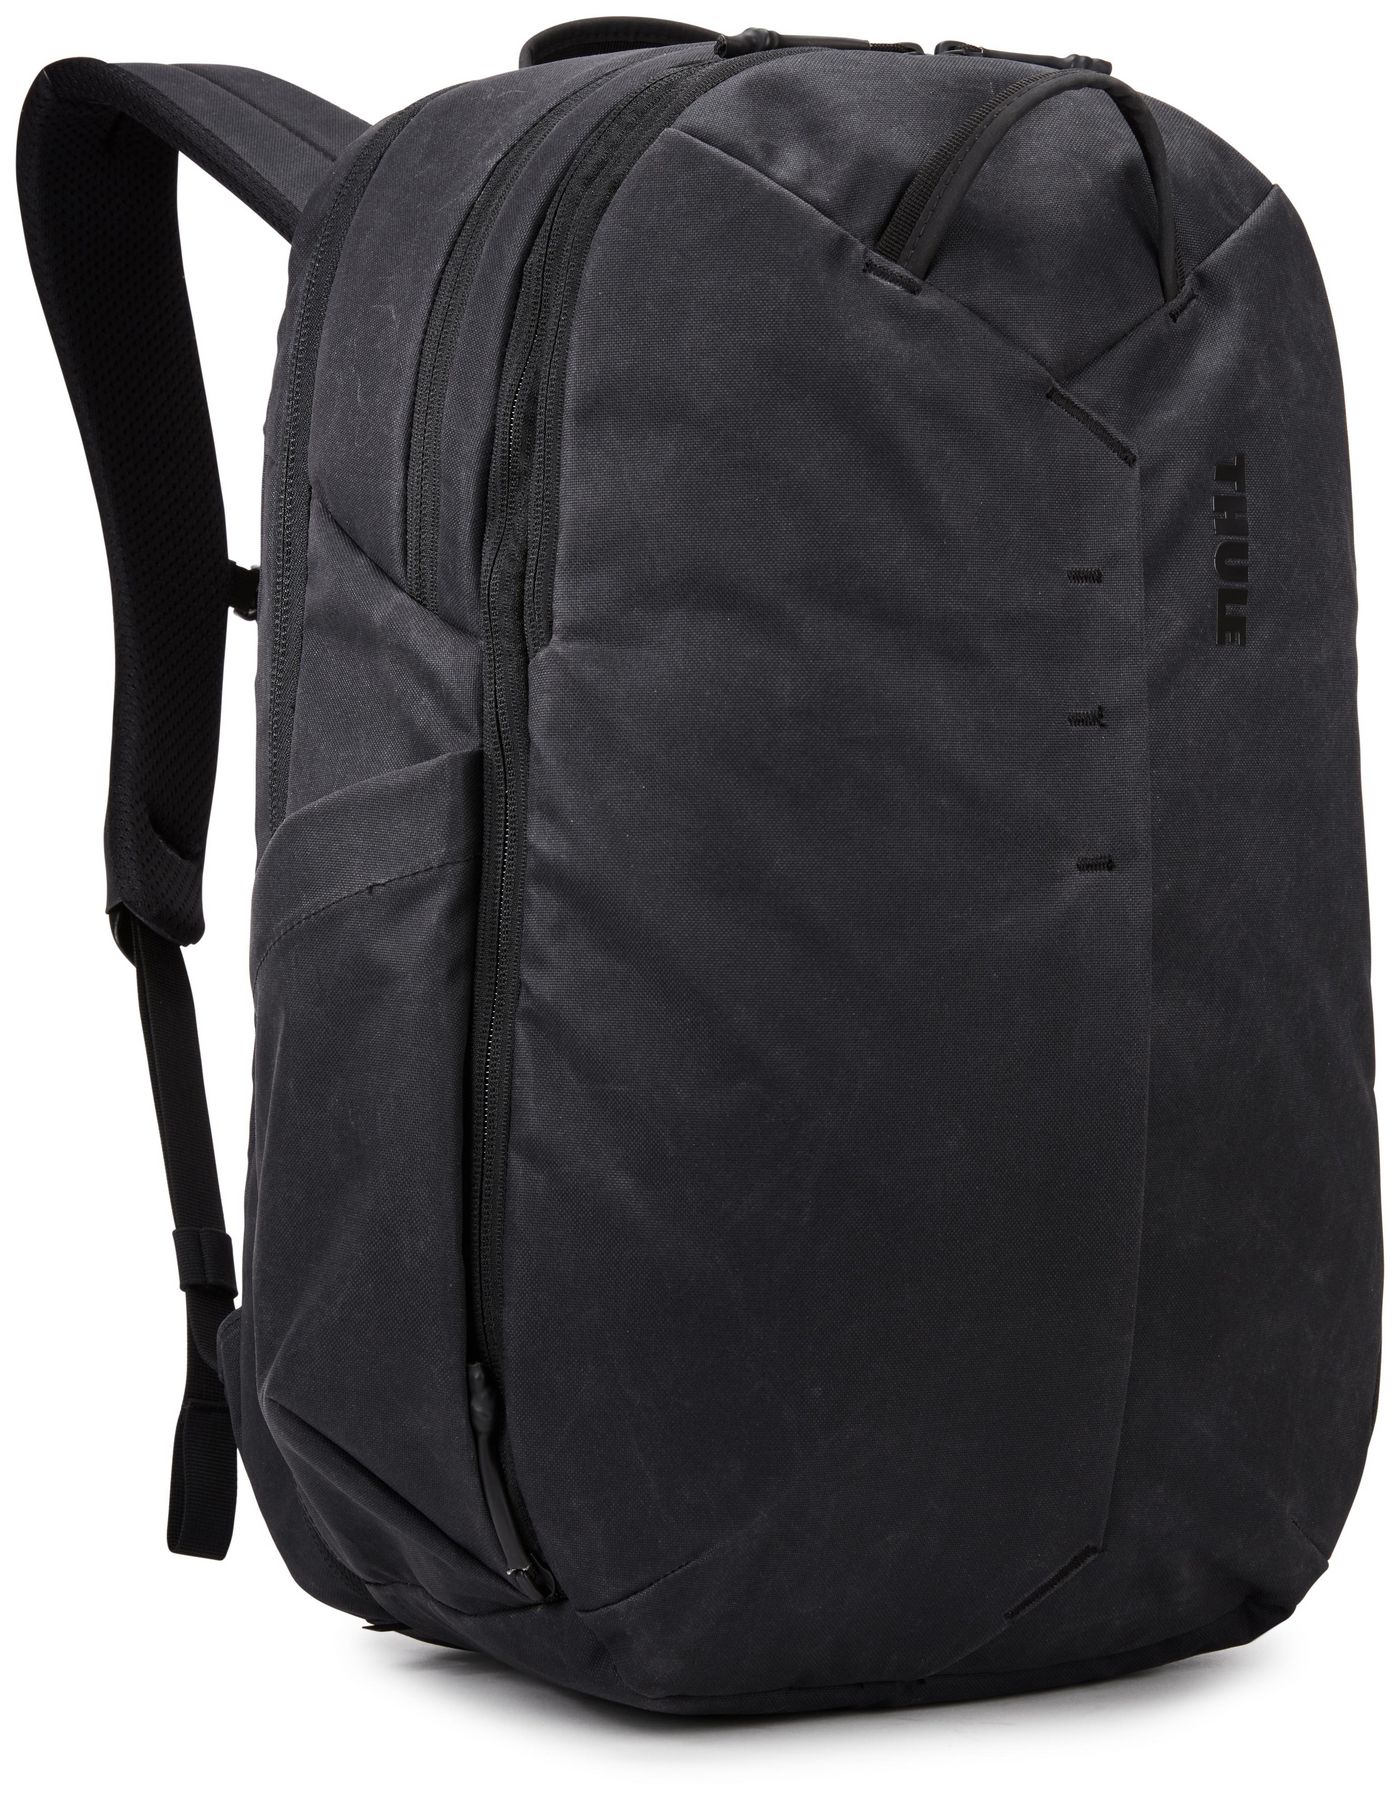 Thule 3204721 W128280843 Aion Tatb128 - Black Backpack 